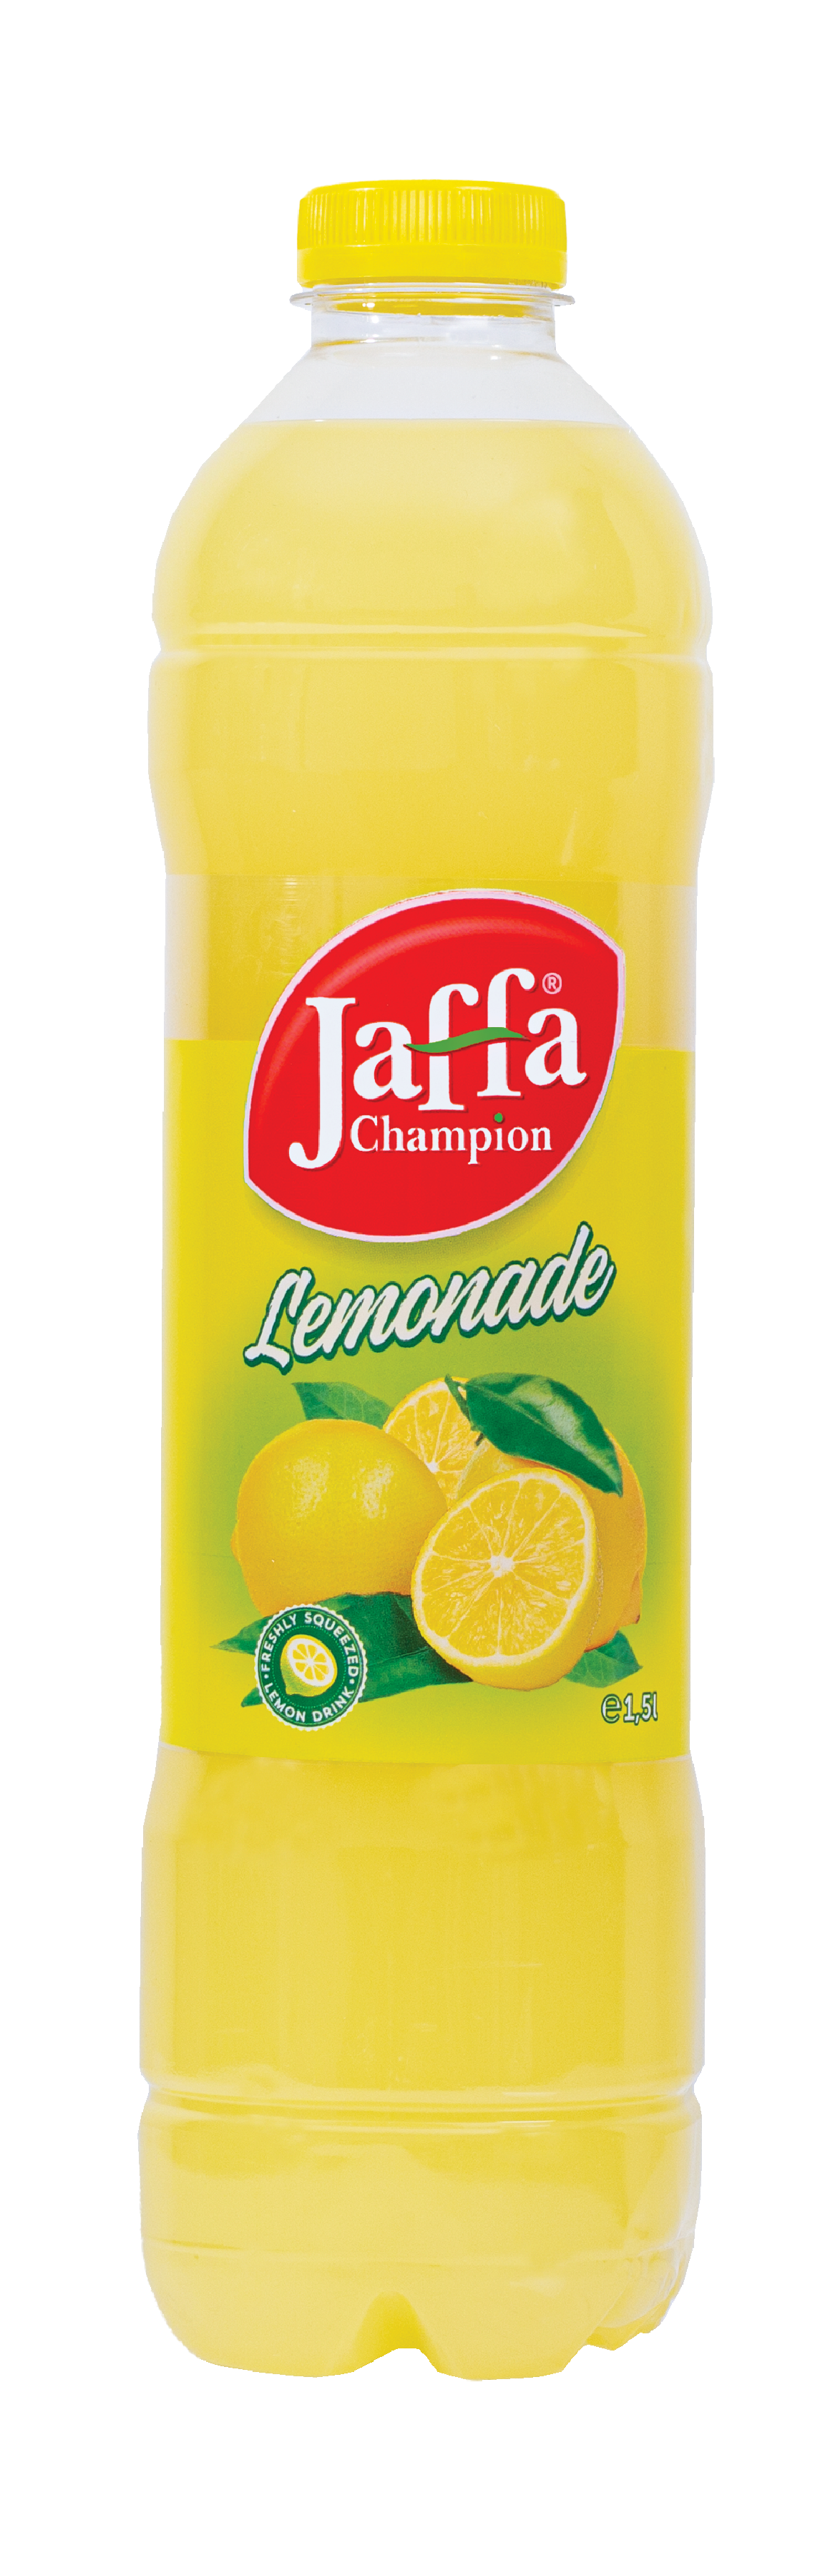 Jaffa Champion Lemonade 1.5L